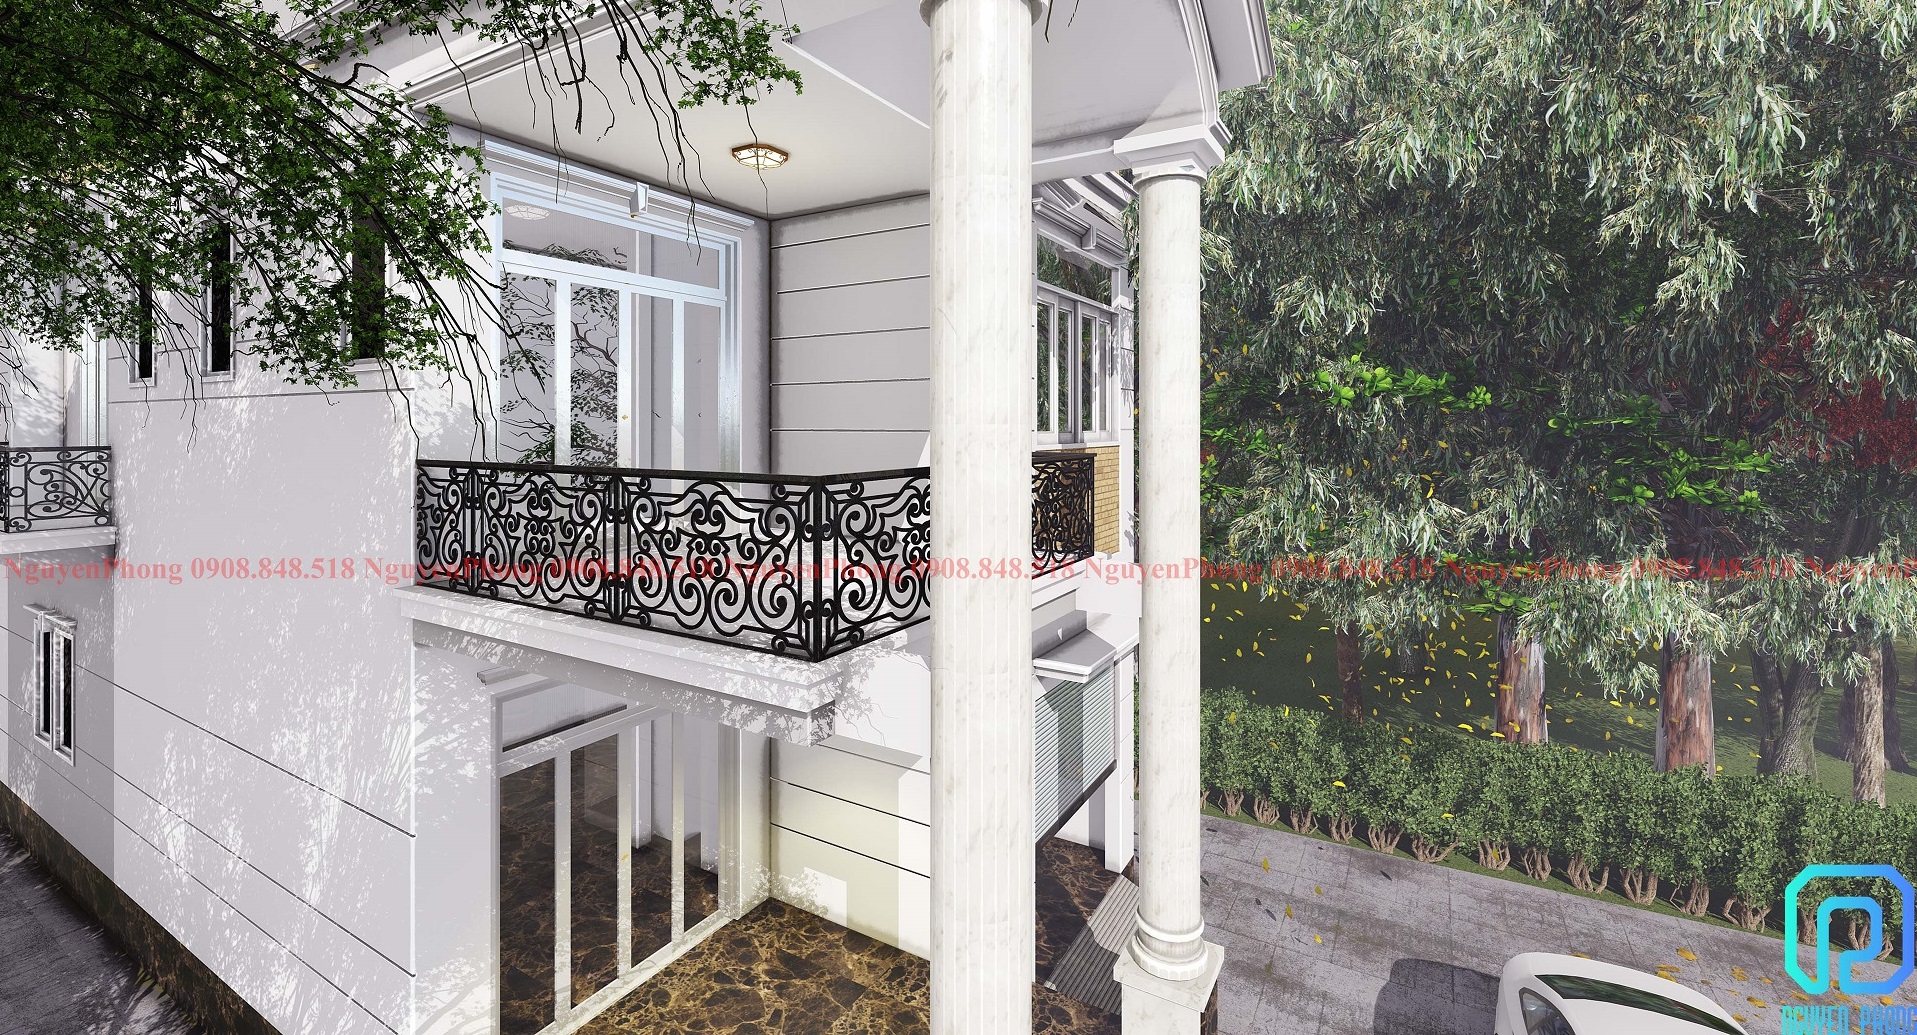 metal-railing-wrought-iron-railing-for-balcony-6.jpeg